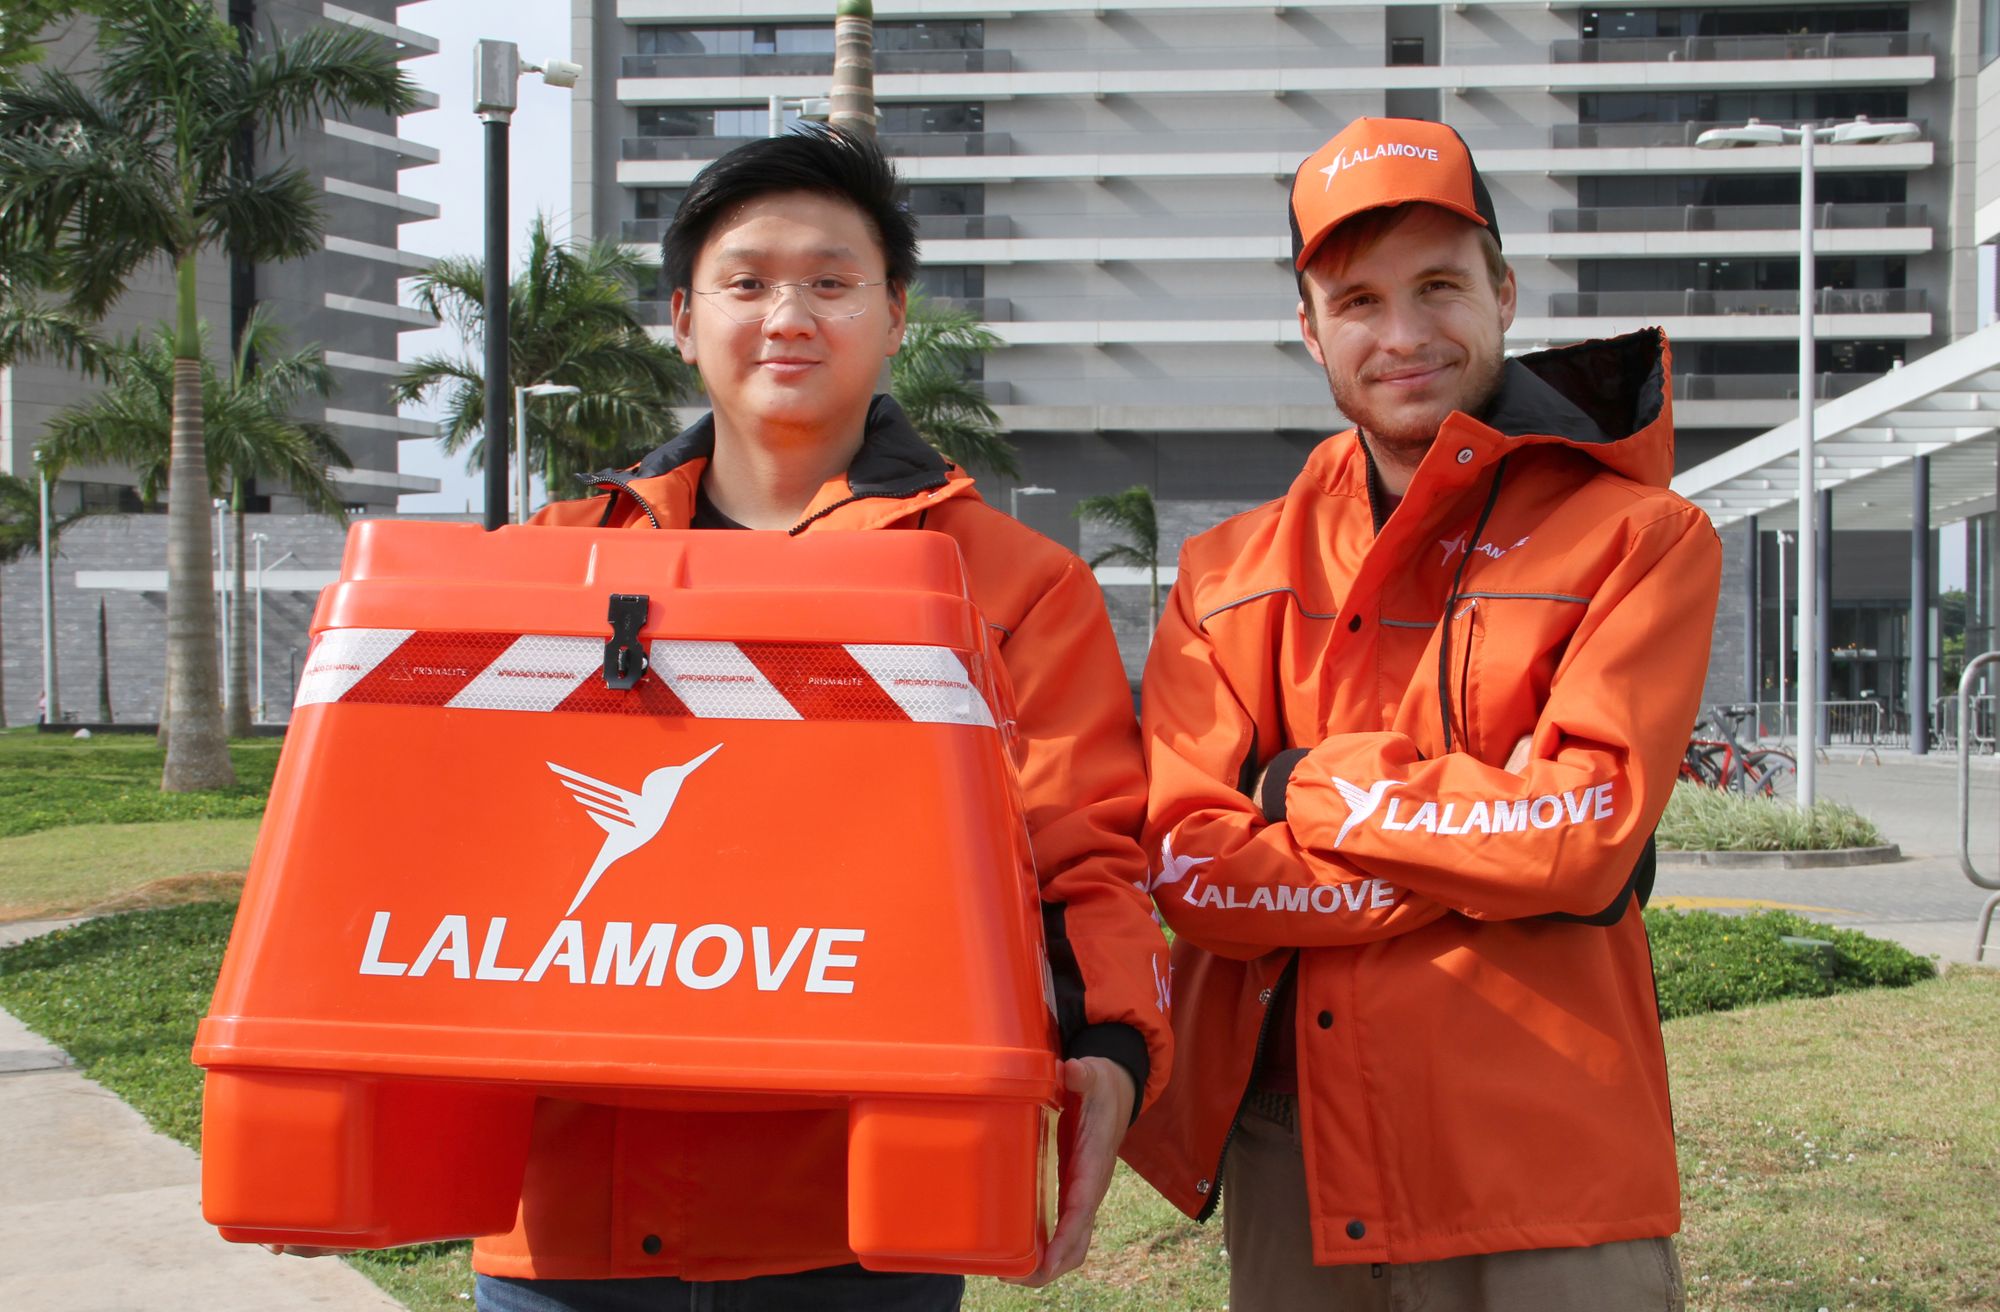 Lalamove - Modelo de negócio asiático cresce no Brasil